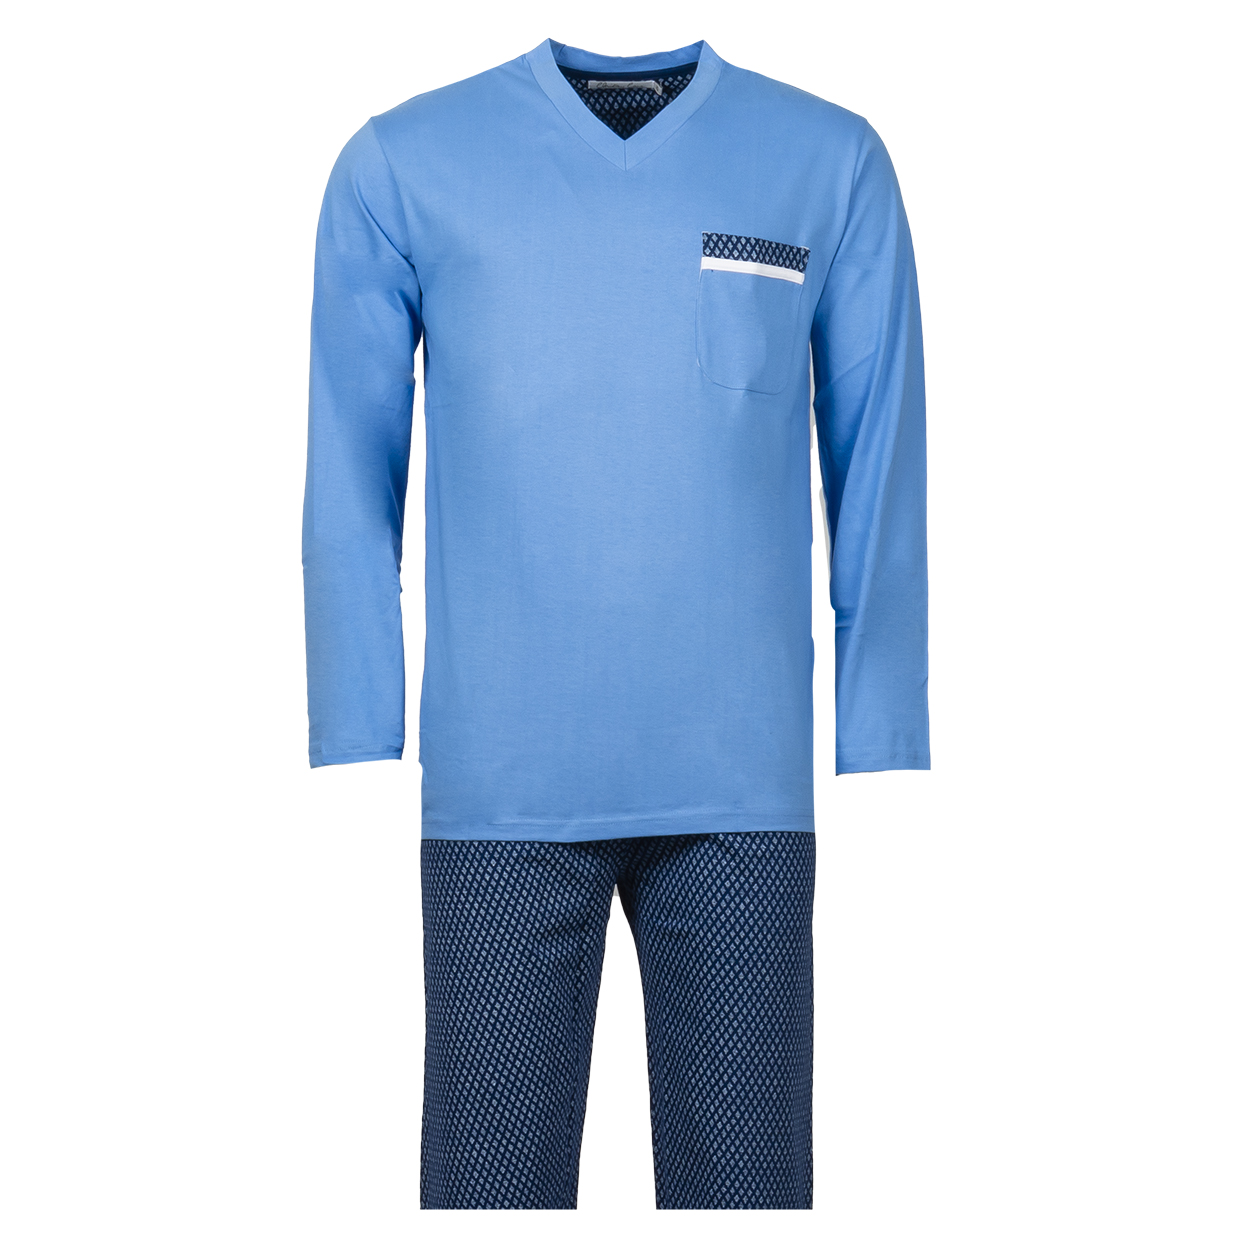 Pyjama Christian Cane Waren en coton : tee-shirt manches longues col V bleu ciel et pantalon bleu ma